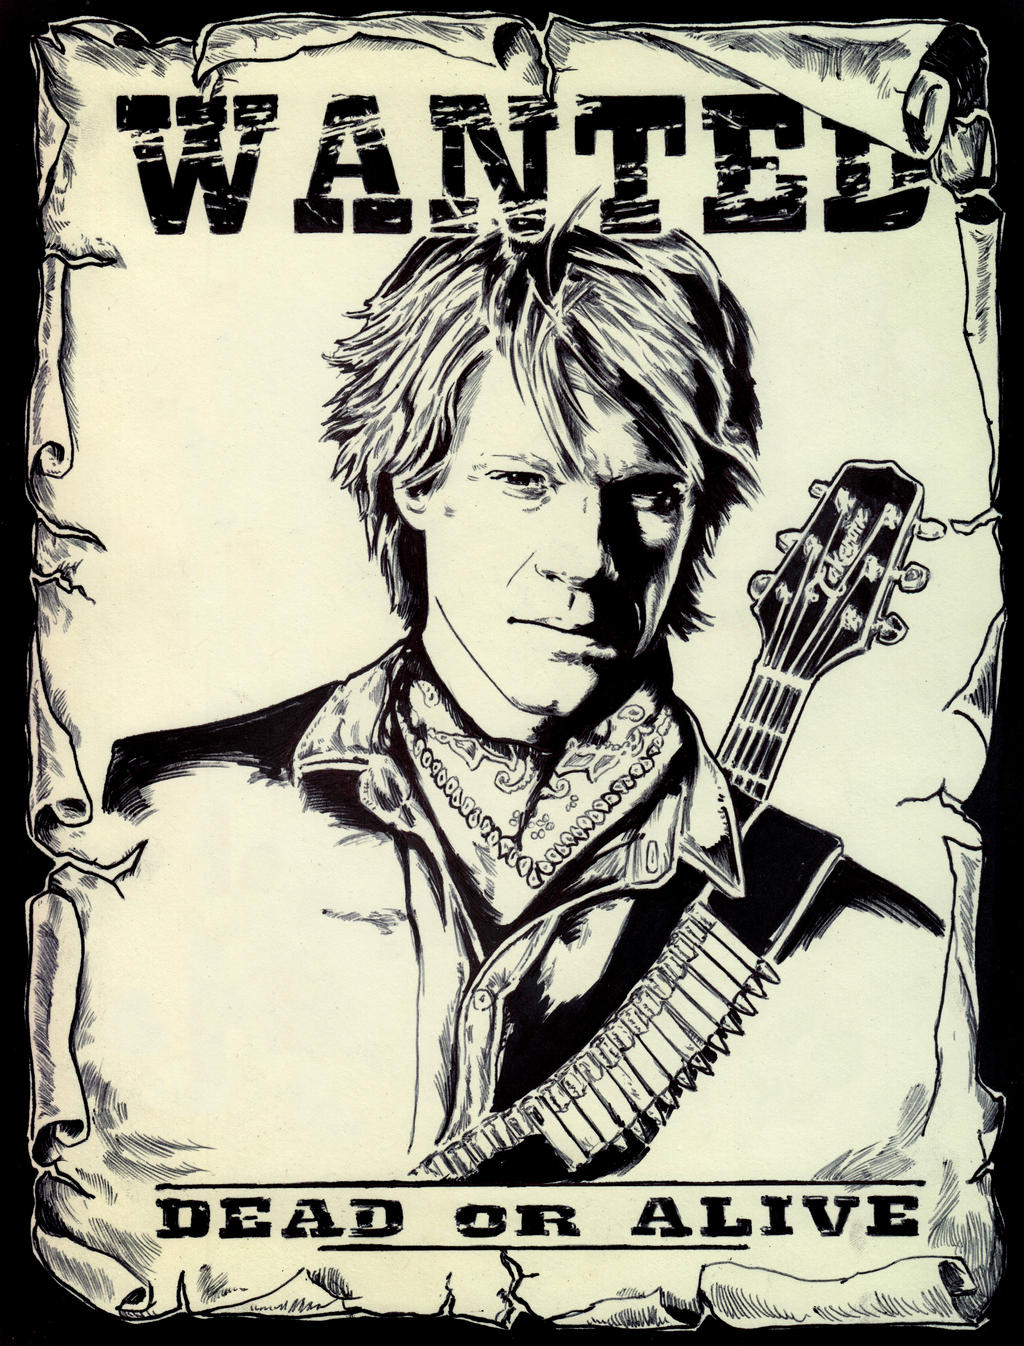 Bon Jovi - Wanted Dead or Alive by JasonKoza on DeviantArt